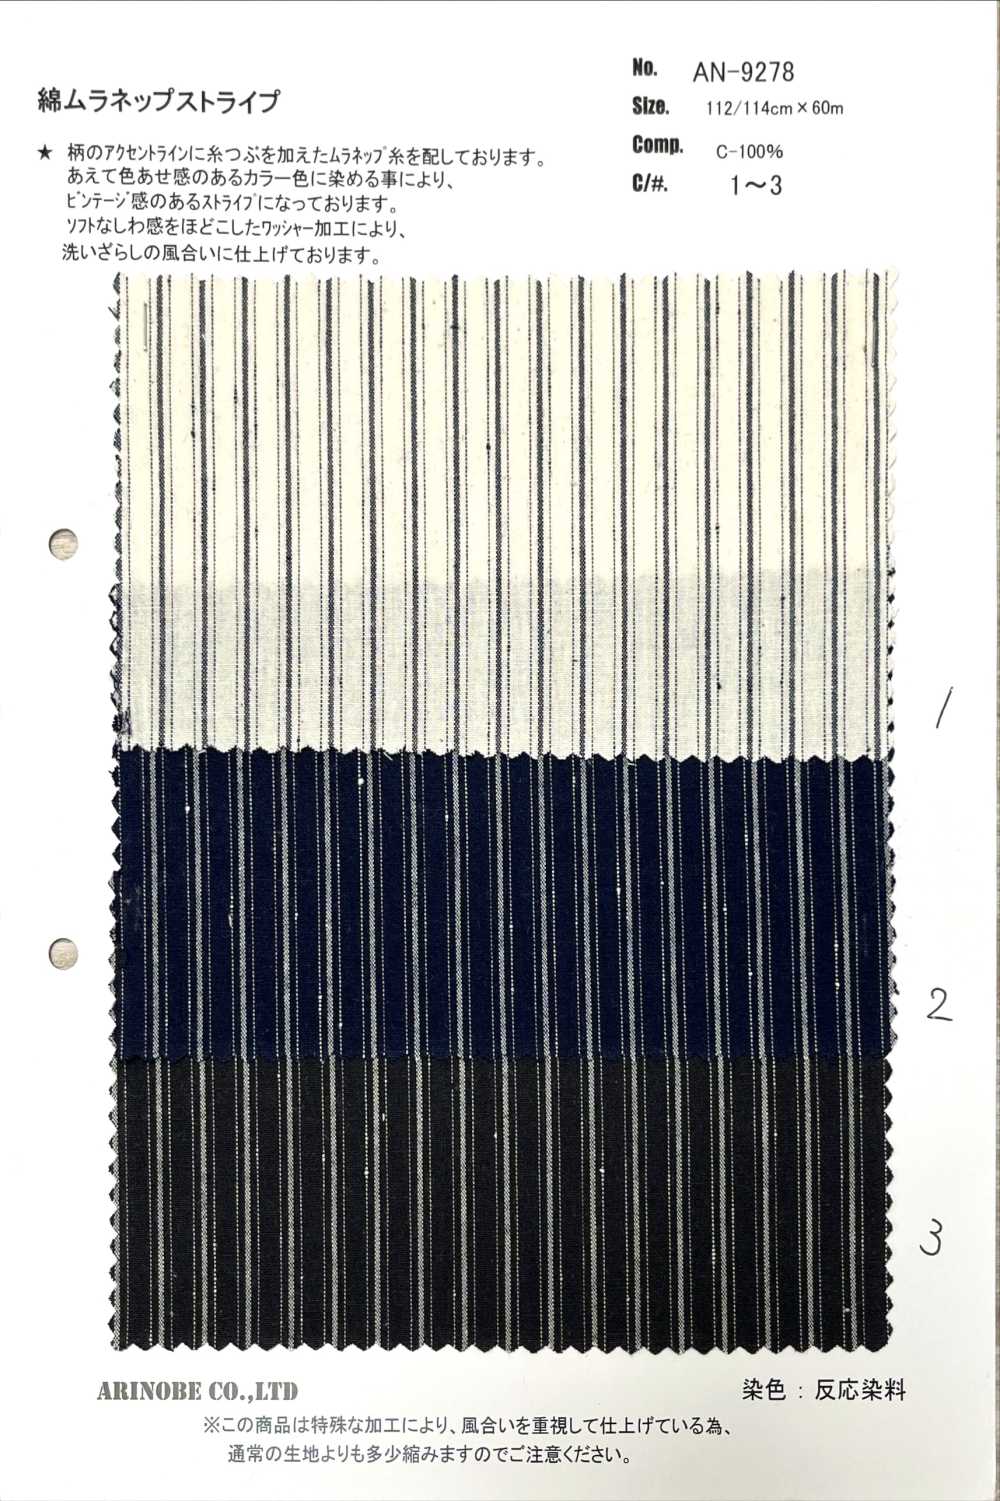 AN-9278 Coton Muranep Stripe[Fabrication De Textile] ARINOBE CO., LTD.